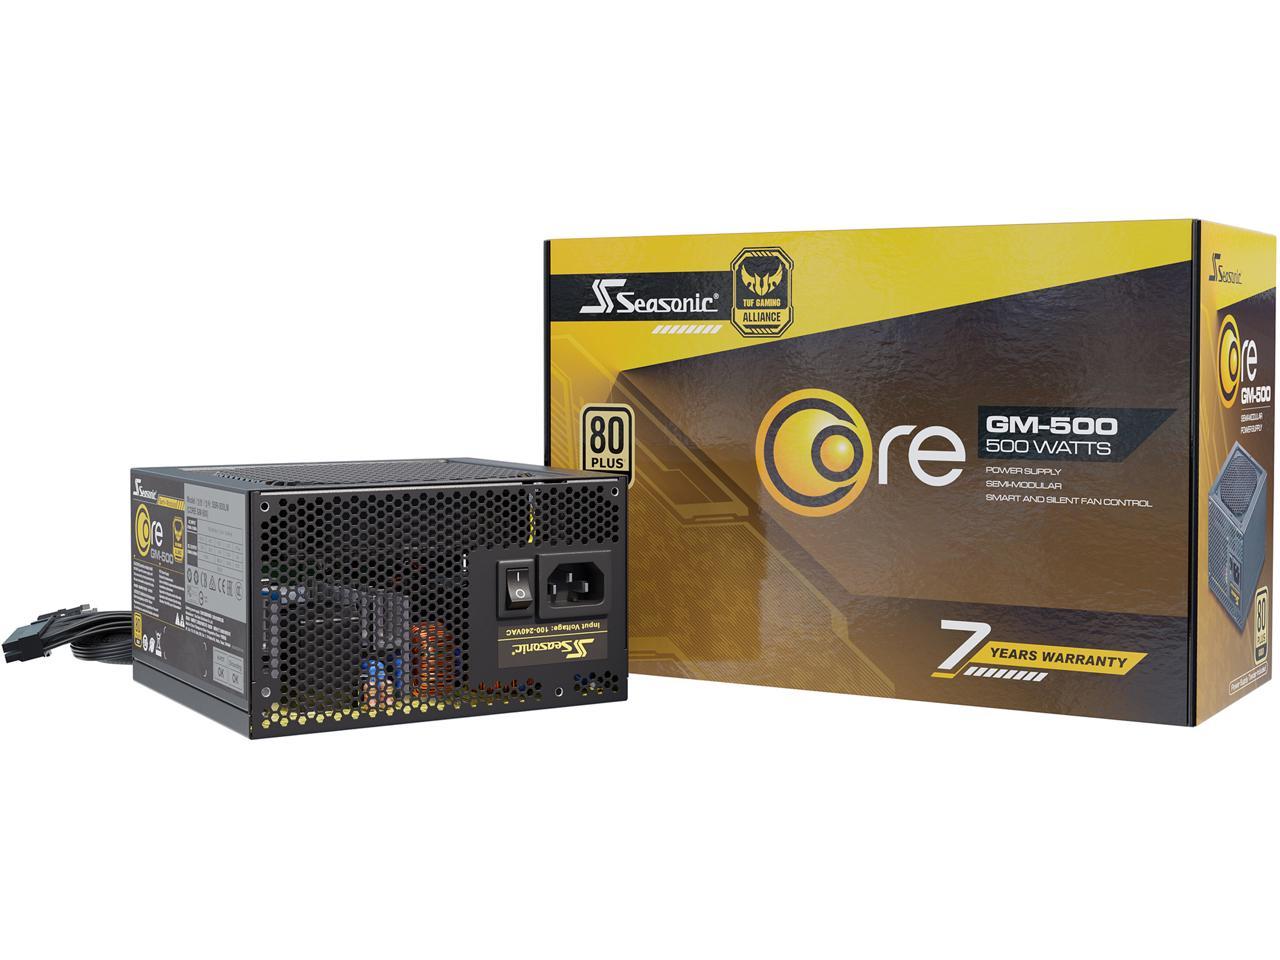 Seasonic Core GM-500 500W 80+ Gold Semi Modular Power Supply $59.99 AR + Free Shipping via Newegg